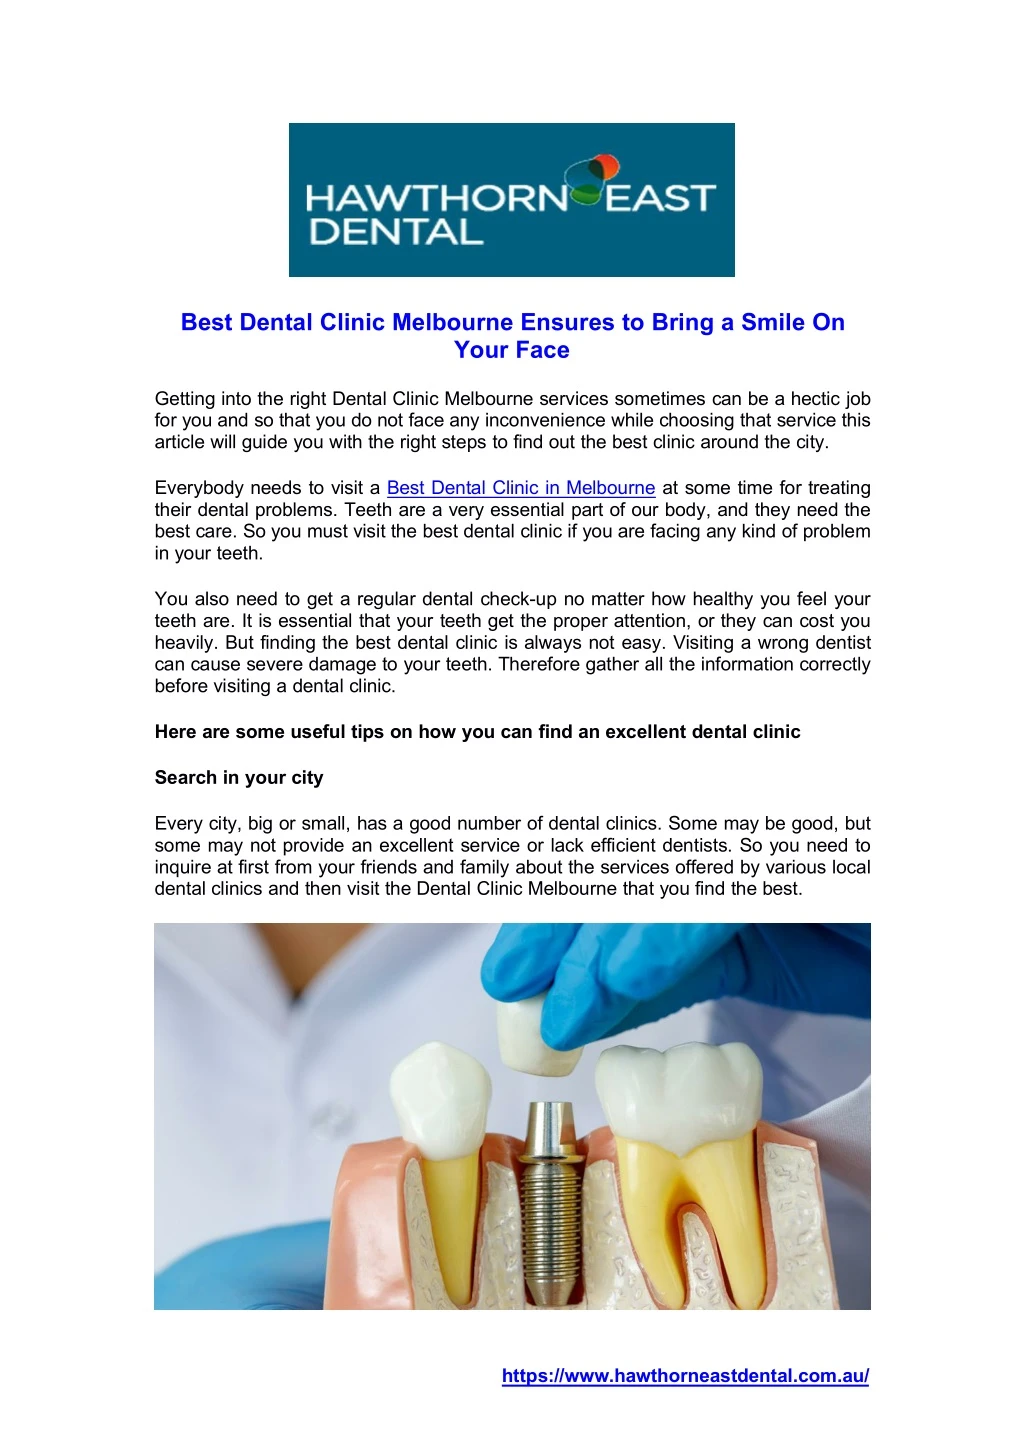 best dental clinic melbourne ensures to bring